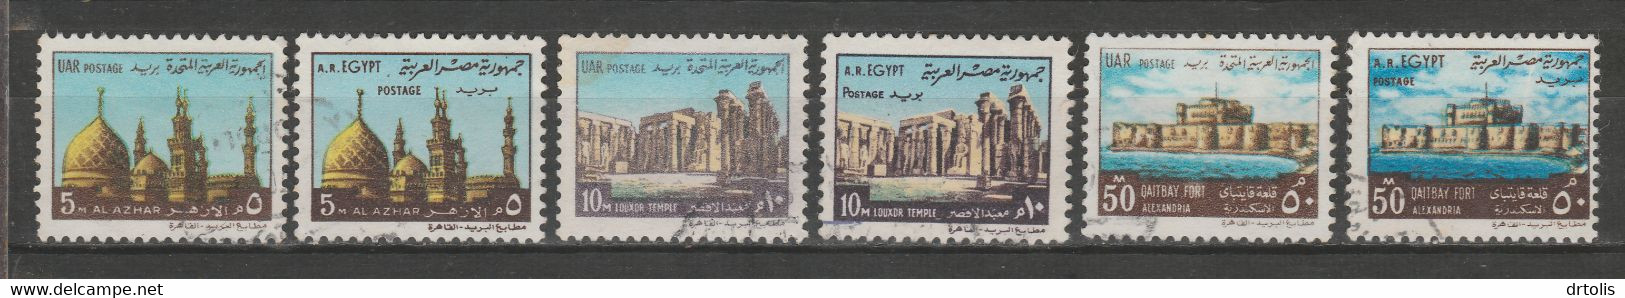 EGYPT / 1970 & 1972 ISSUES / VF USED - Gebruikt